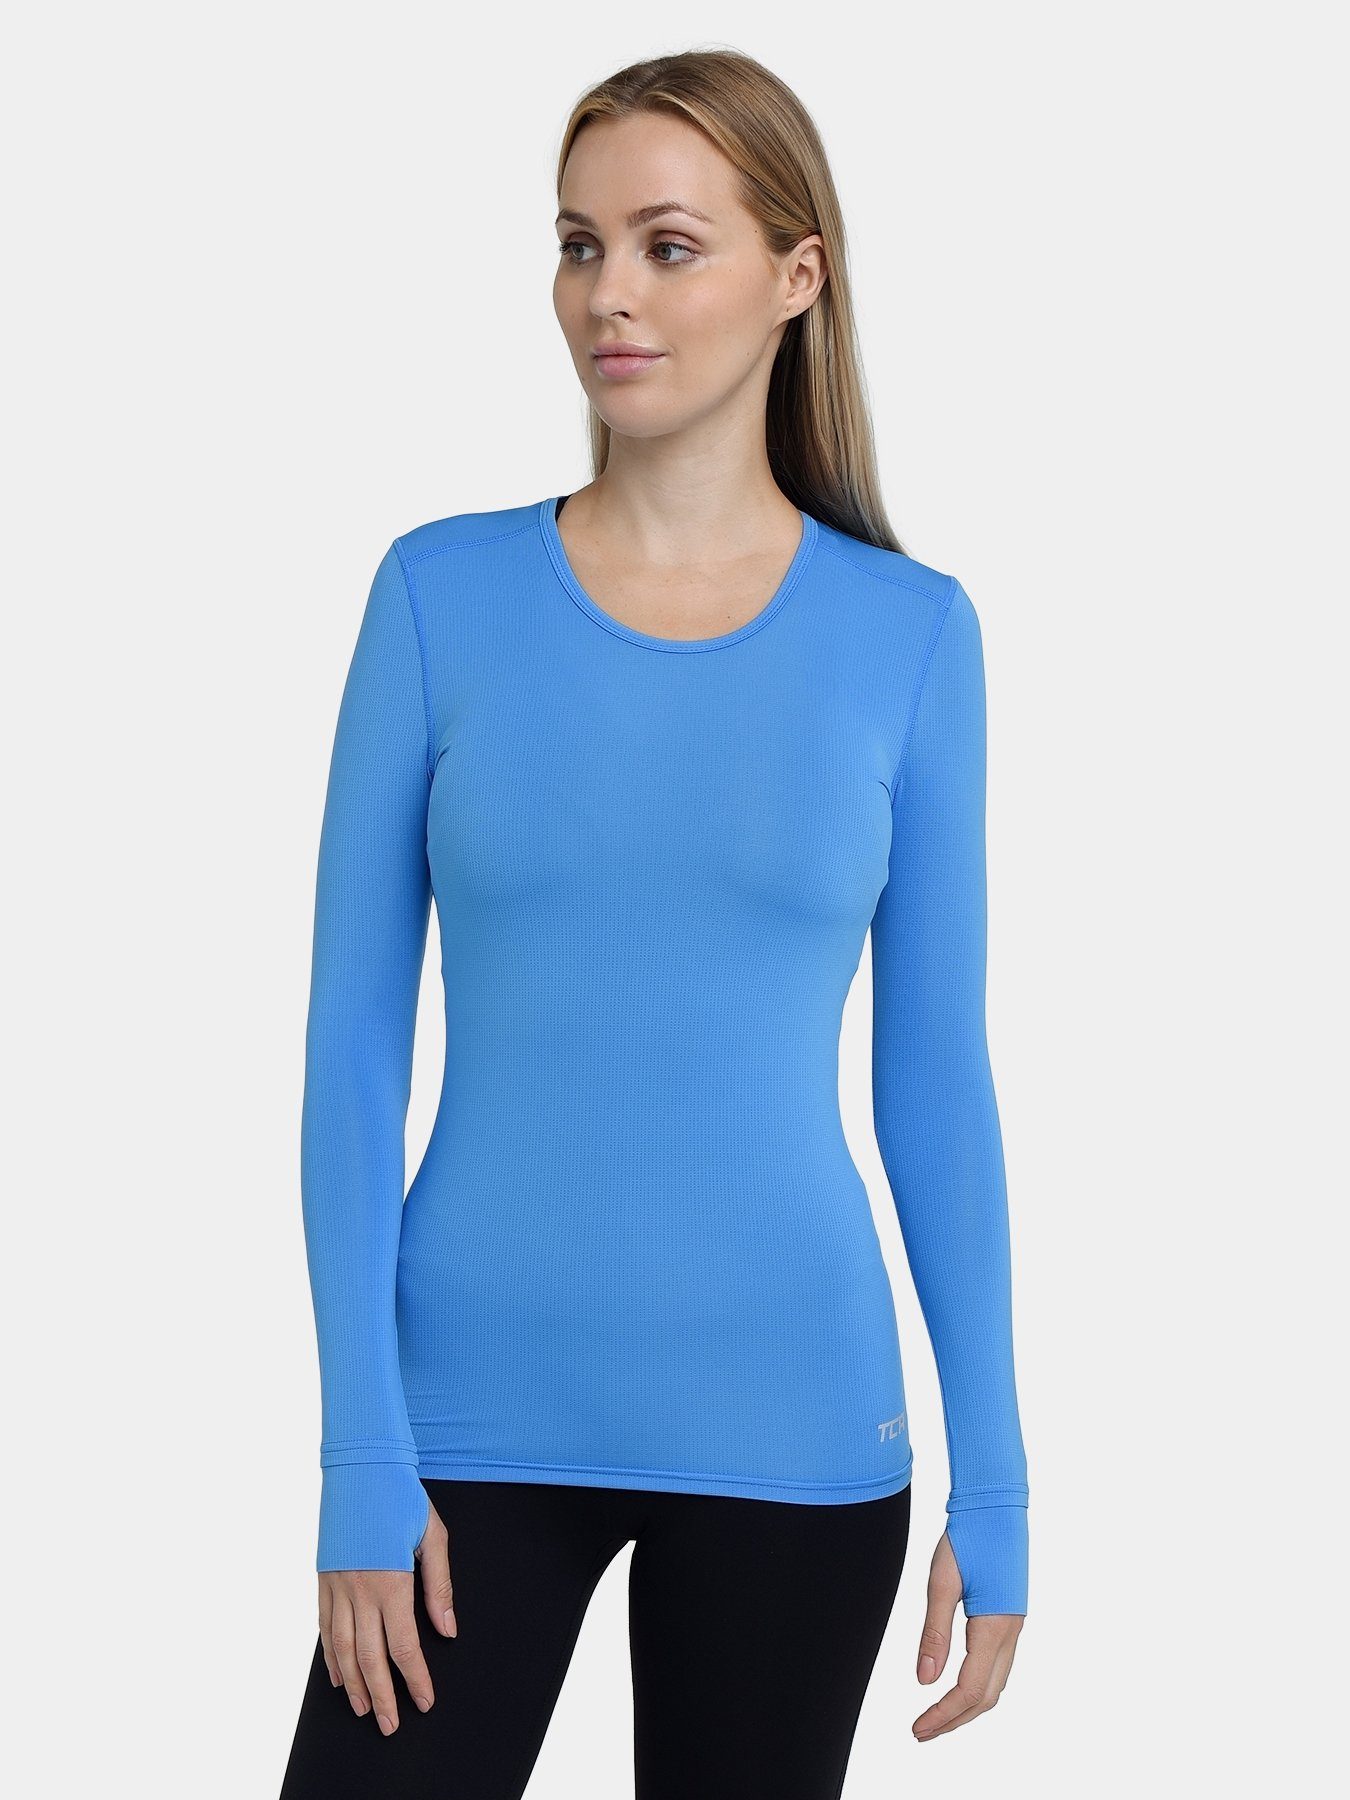 Women's Stamina Long Sleeve Running Top with Zip Pocket - Blue